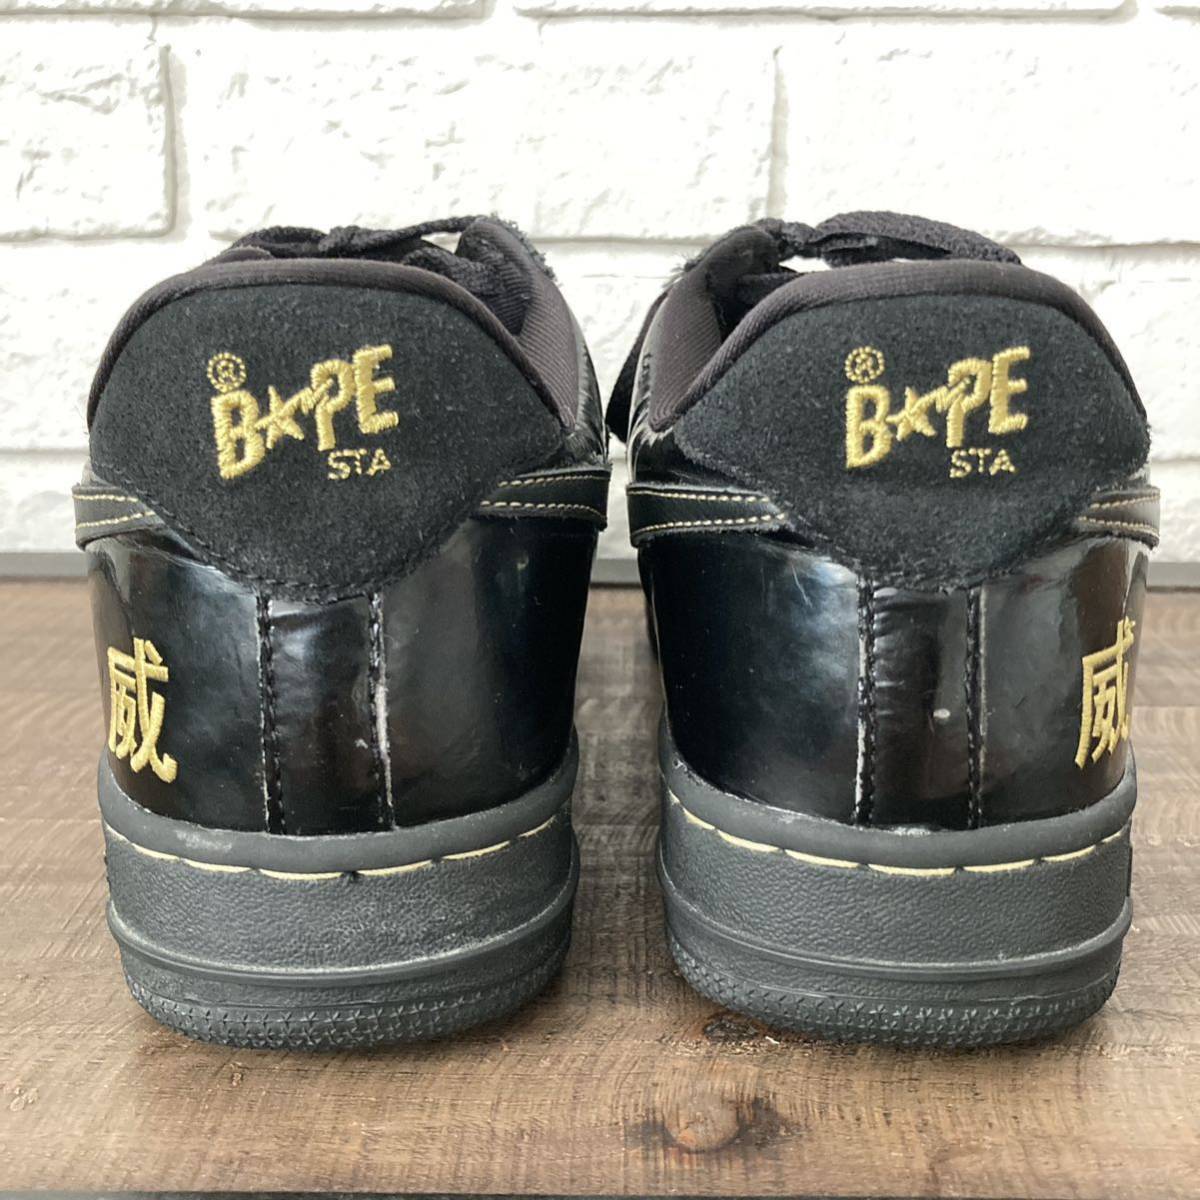 * очень редкий * EVOKE BAPESTA спортивные туфли 28cm black a bathing ape BAPE STA shoes sneakers Ape Bape Bape старт NIGO z041